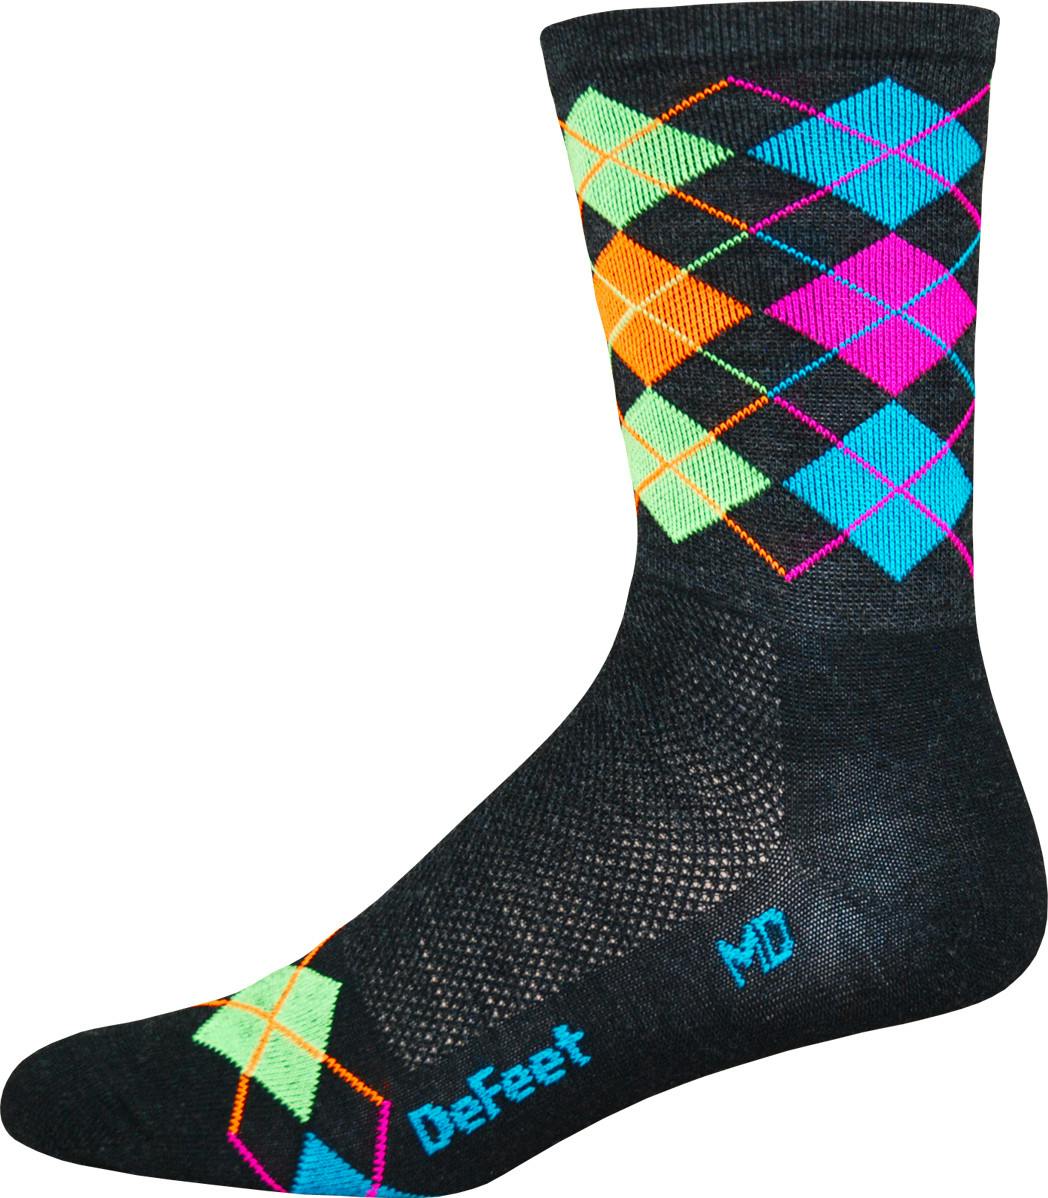 Wooleator HT Argyle Socks Charcoal/HiVis Multicolou